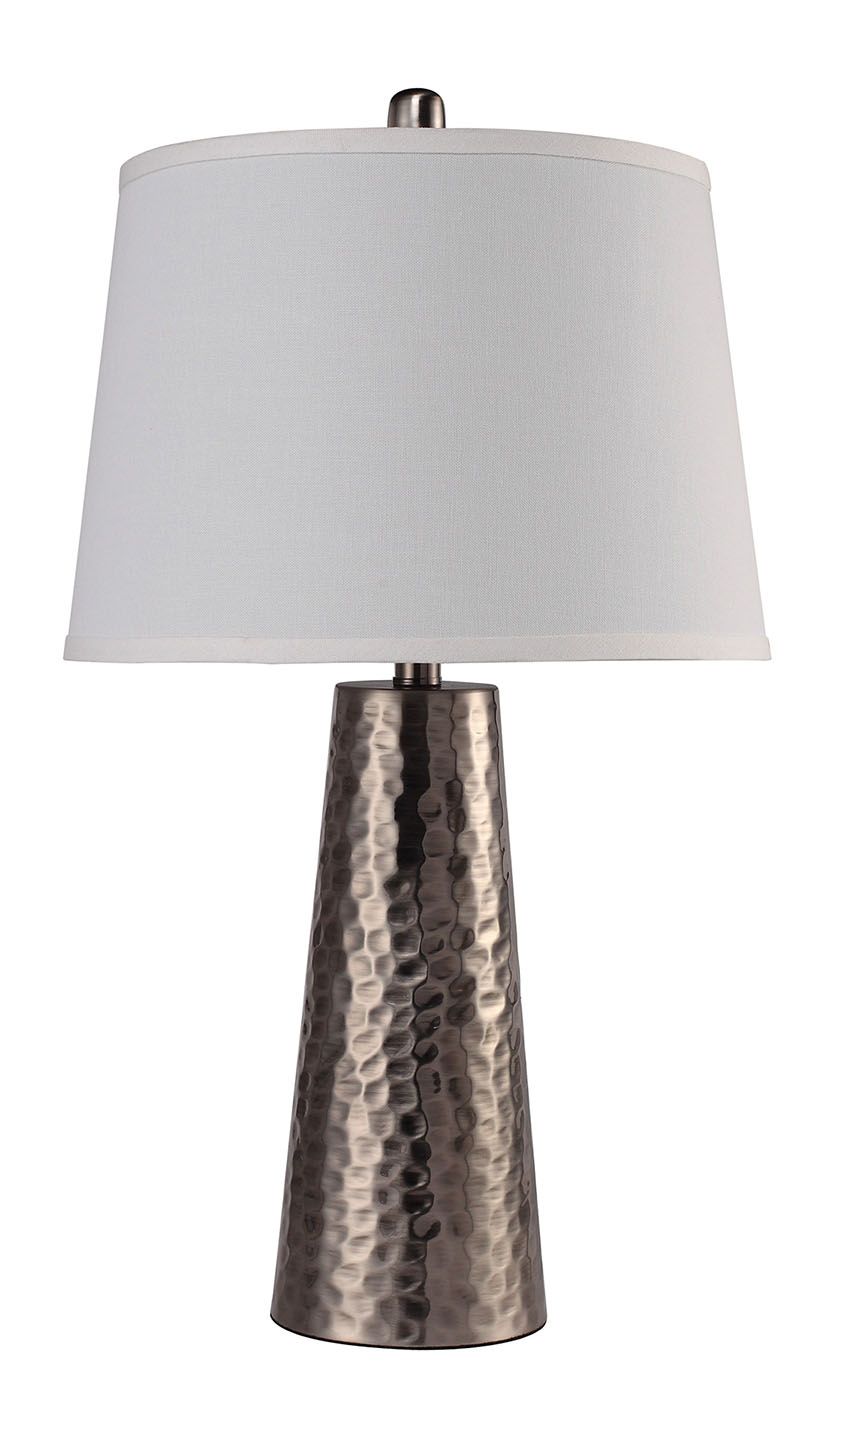 Piapot Table Lamp